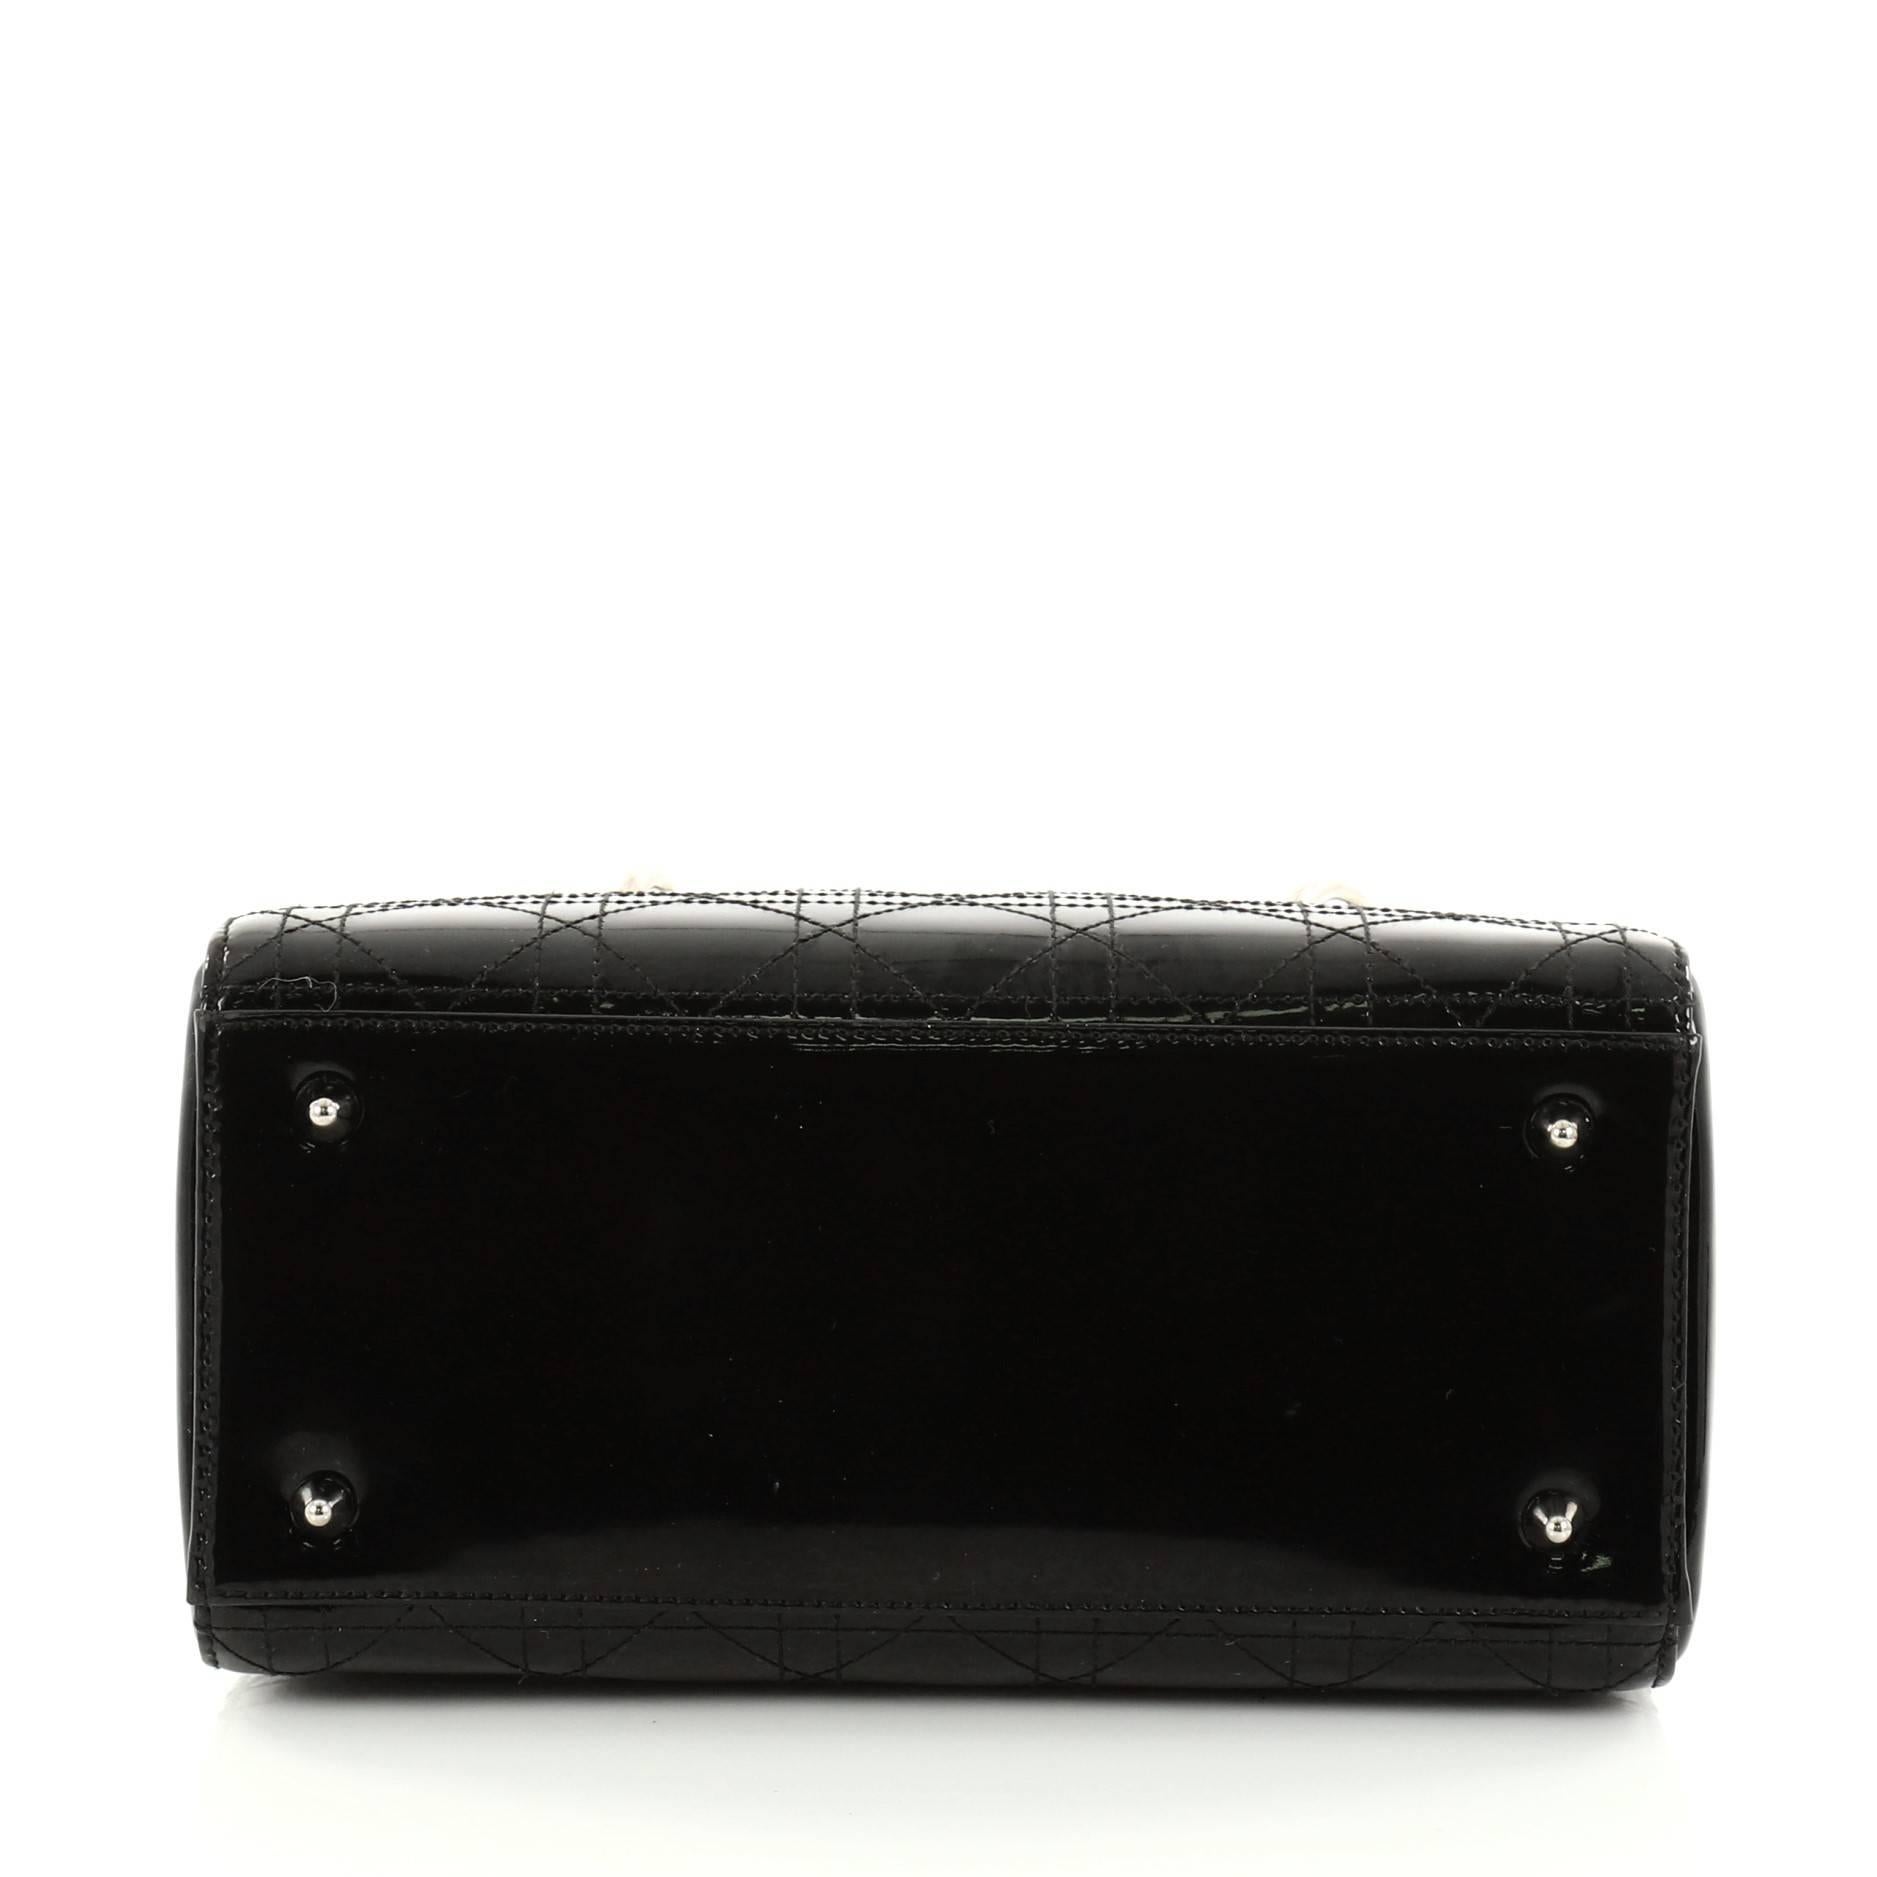 Black Christian Dior Lady Dior Handbag Stitched Cannage Patent Medium